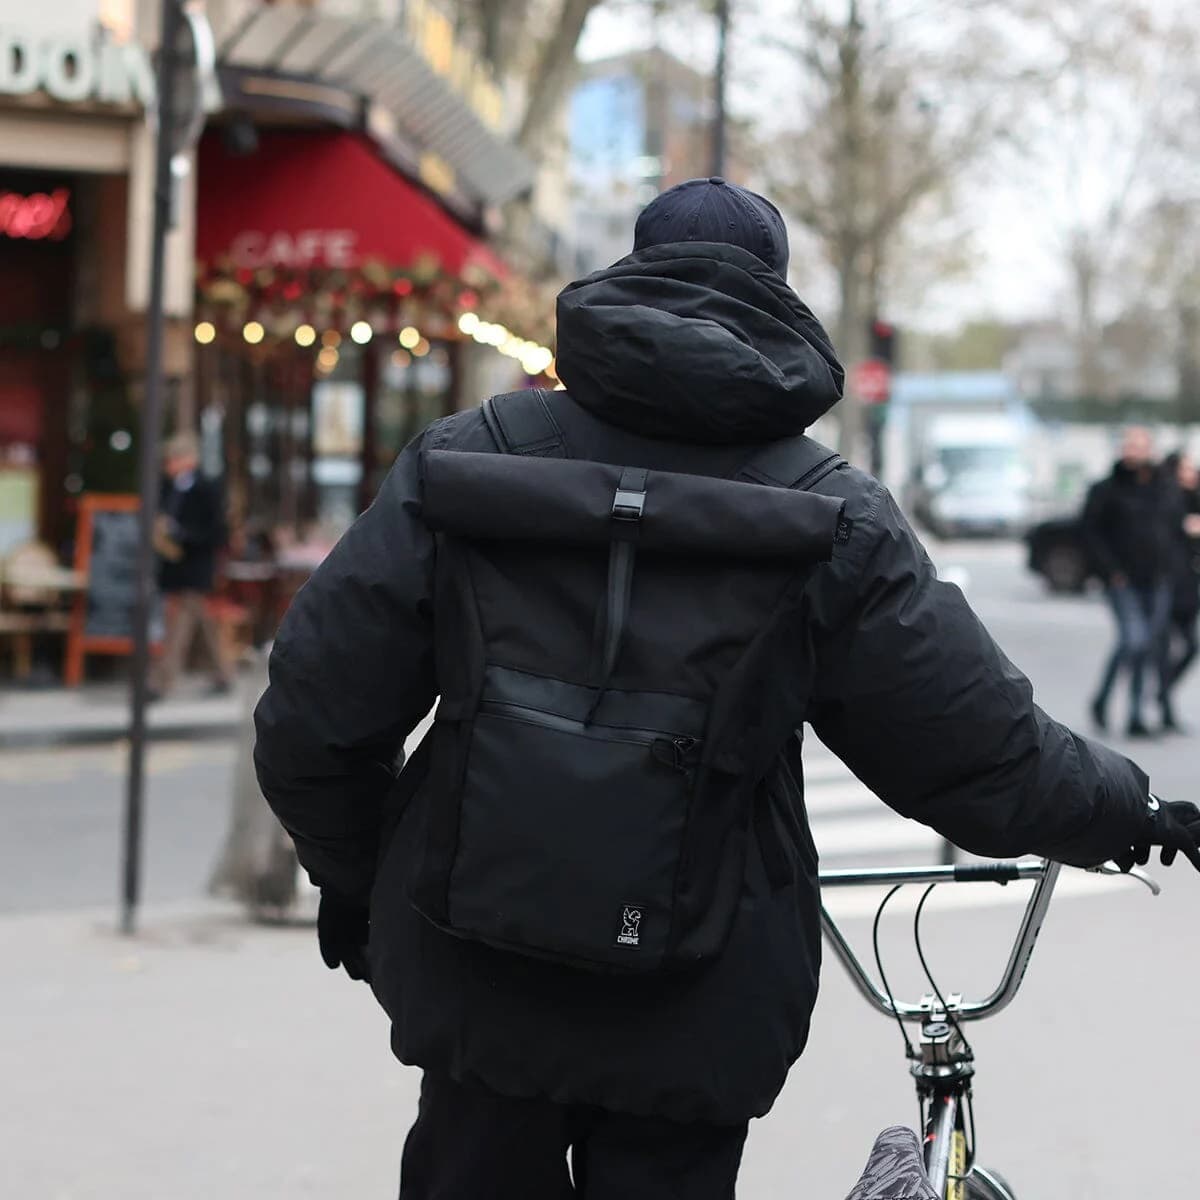 Yalta backpack on a person walking a bike